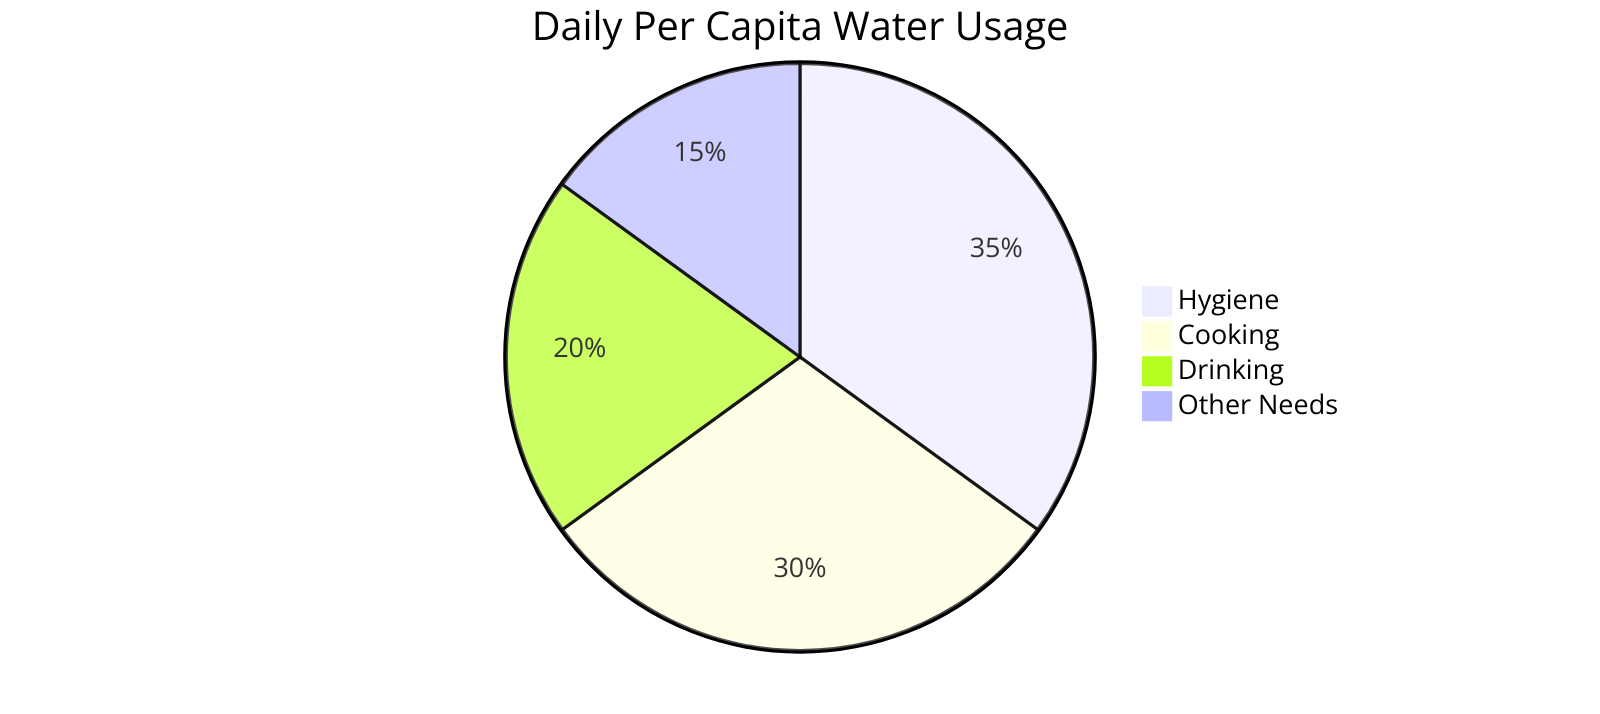 the daily per capita water usage breakdown